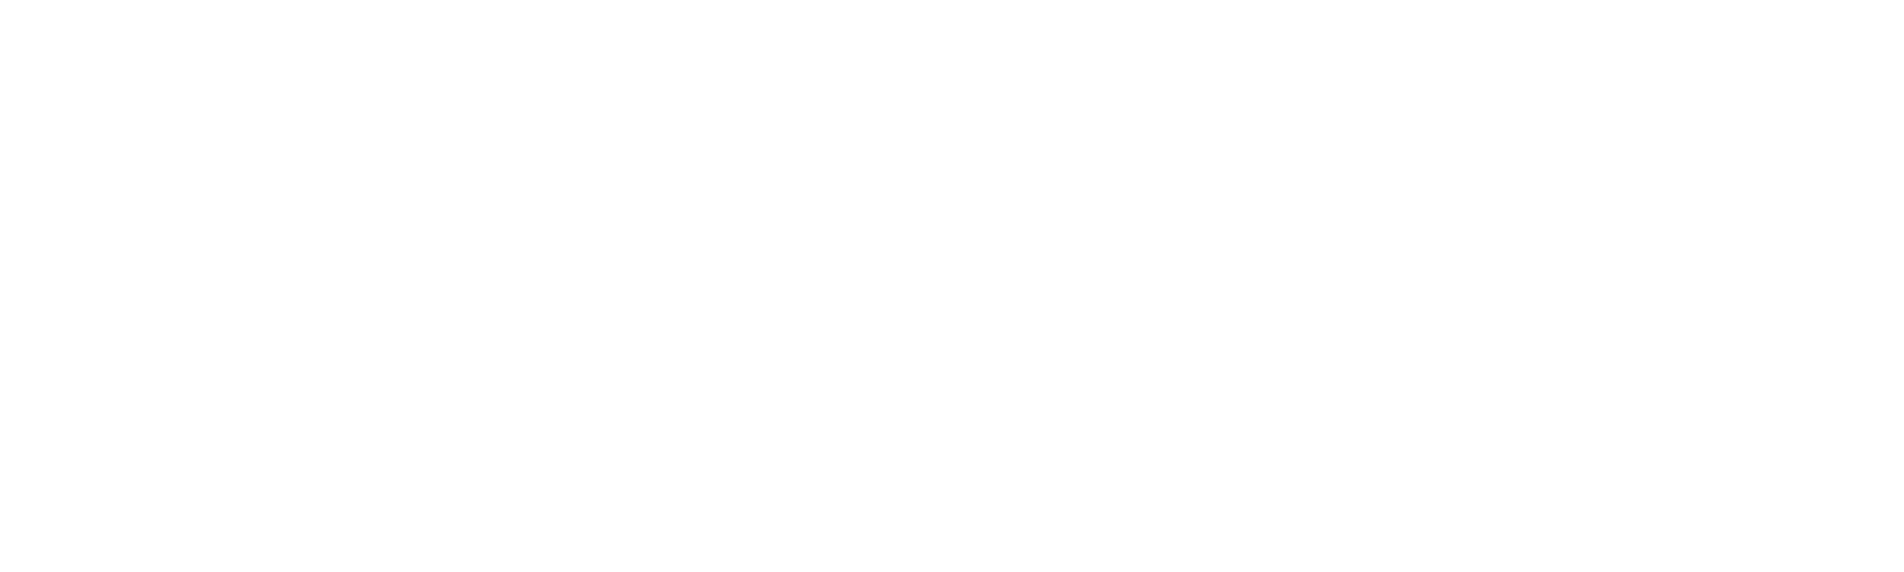 Falck top logo